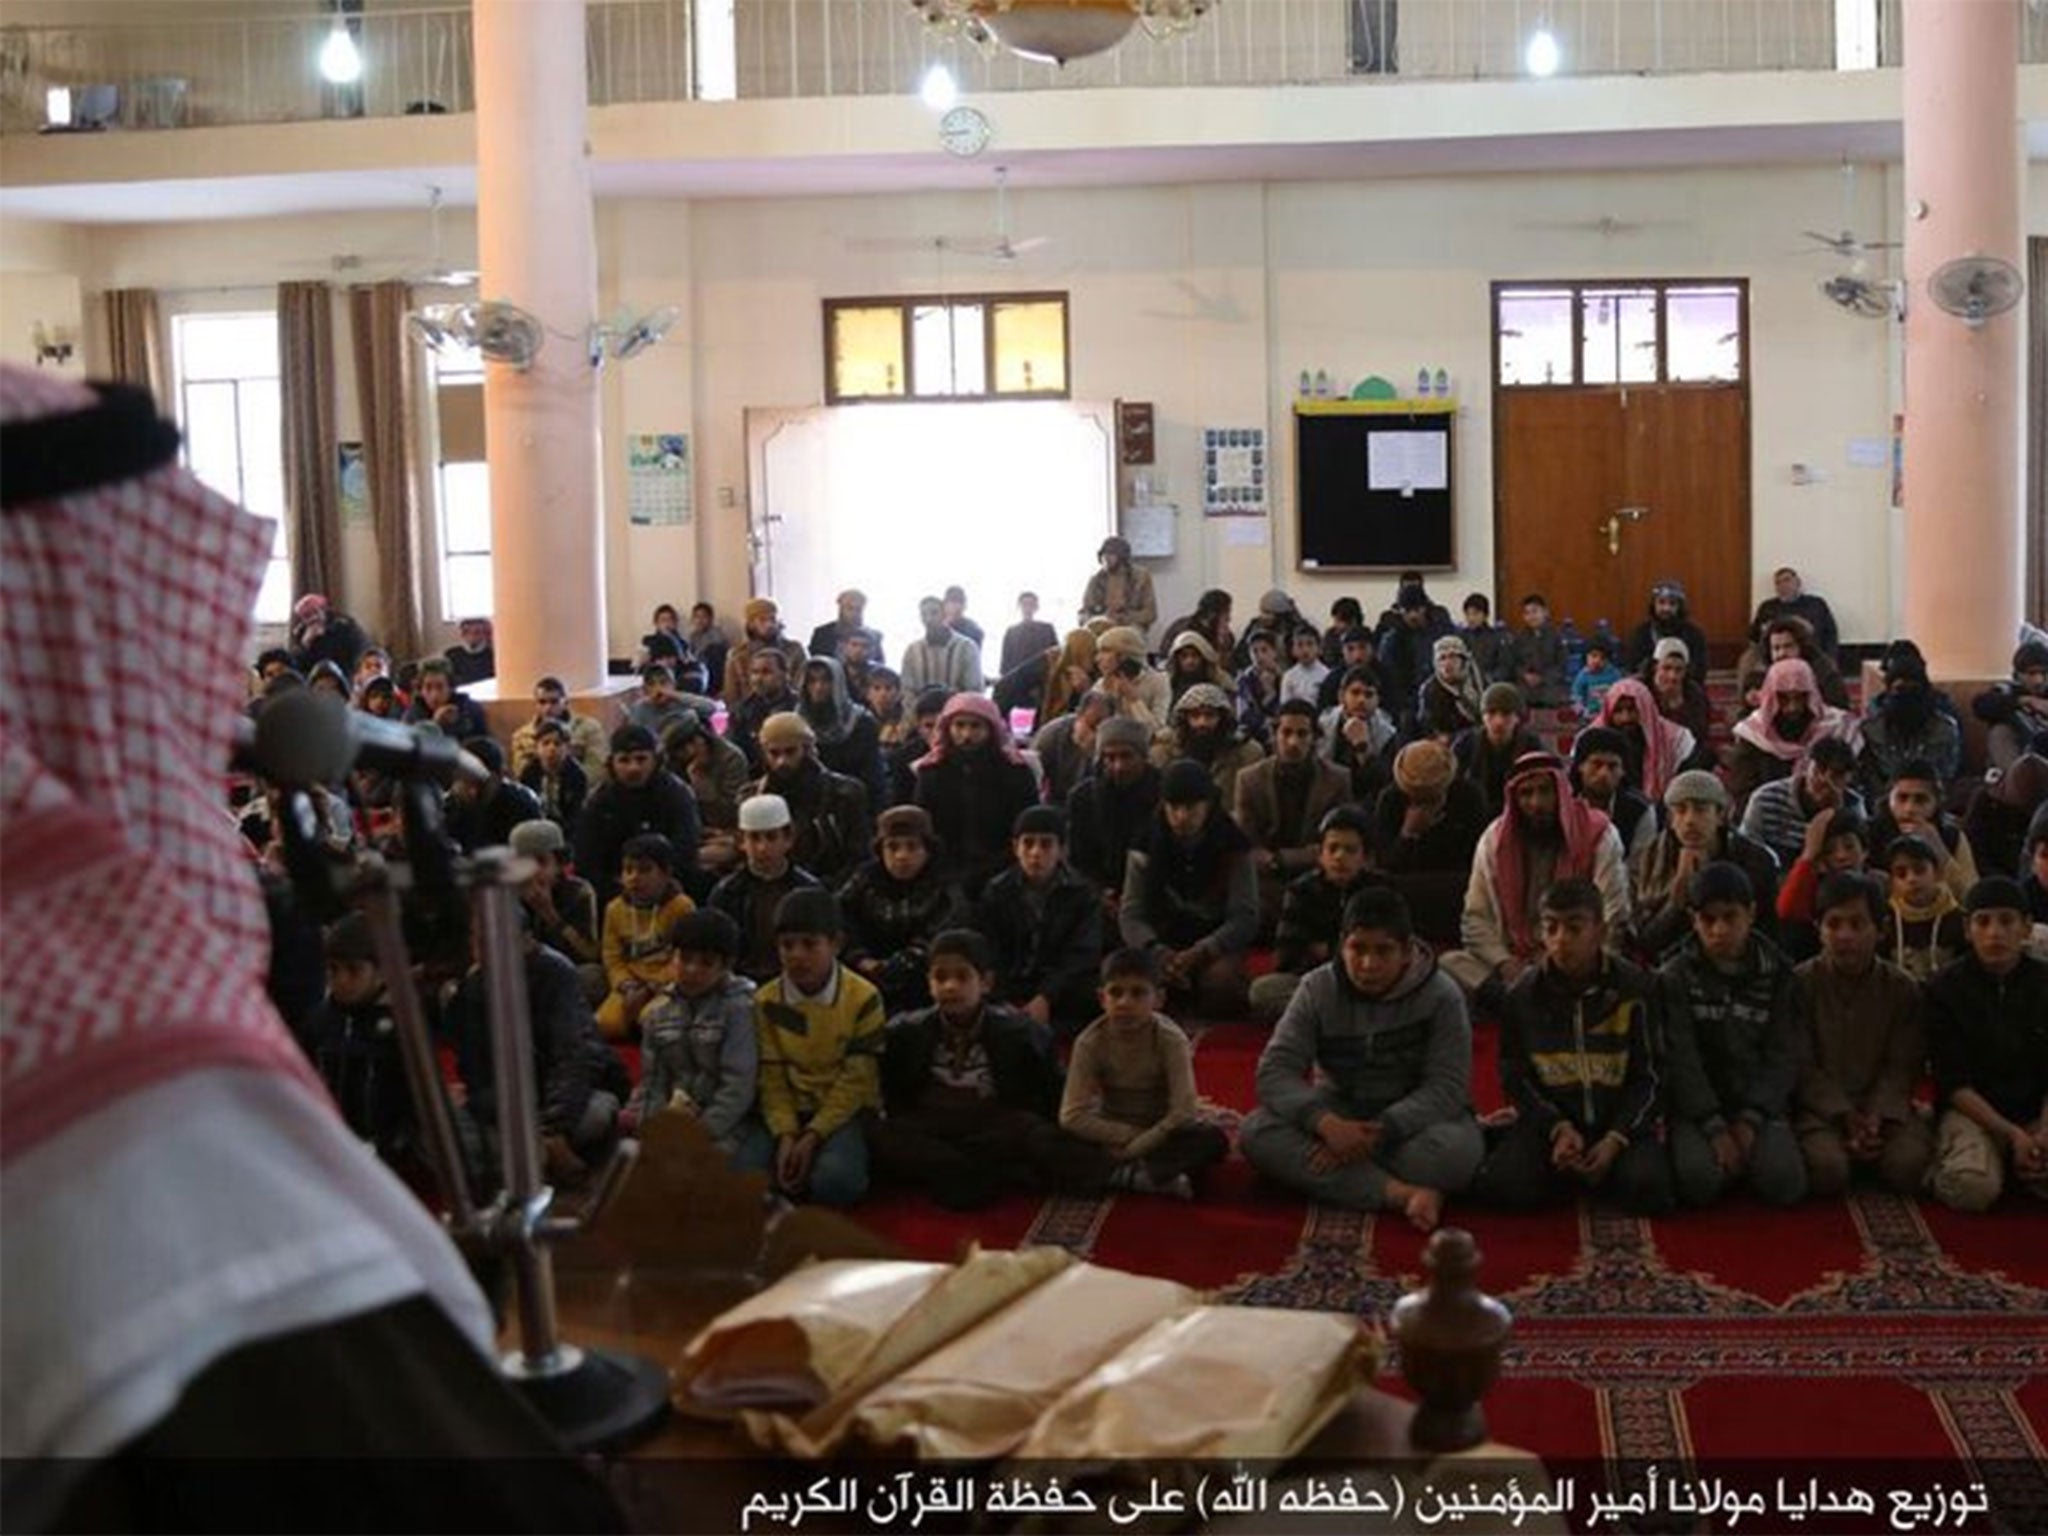 Isis supporters claim their leader was addressing children in Fallujah, Iraq